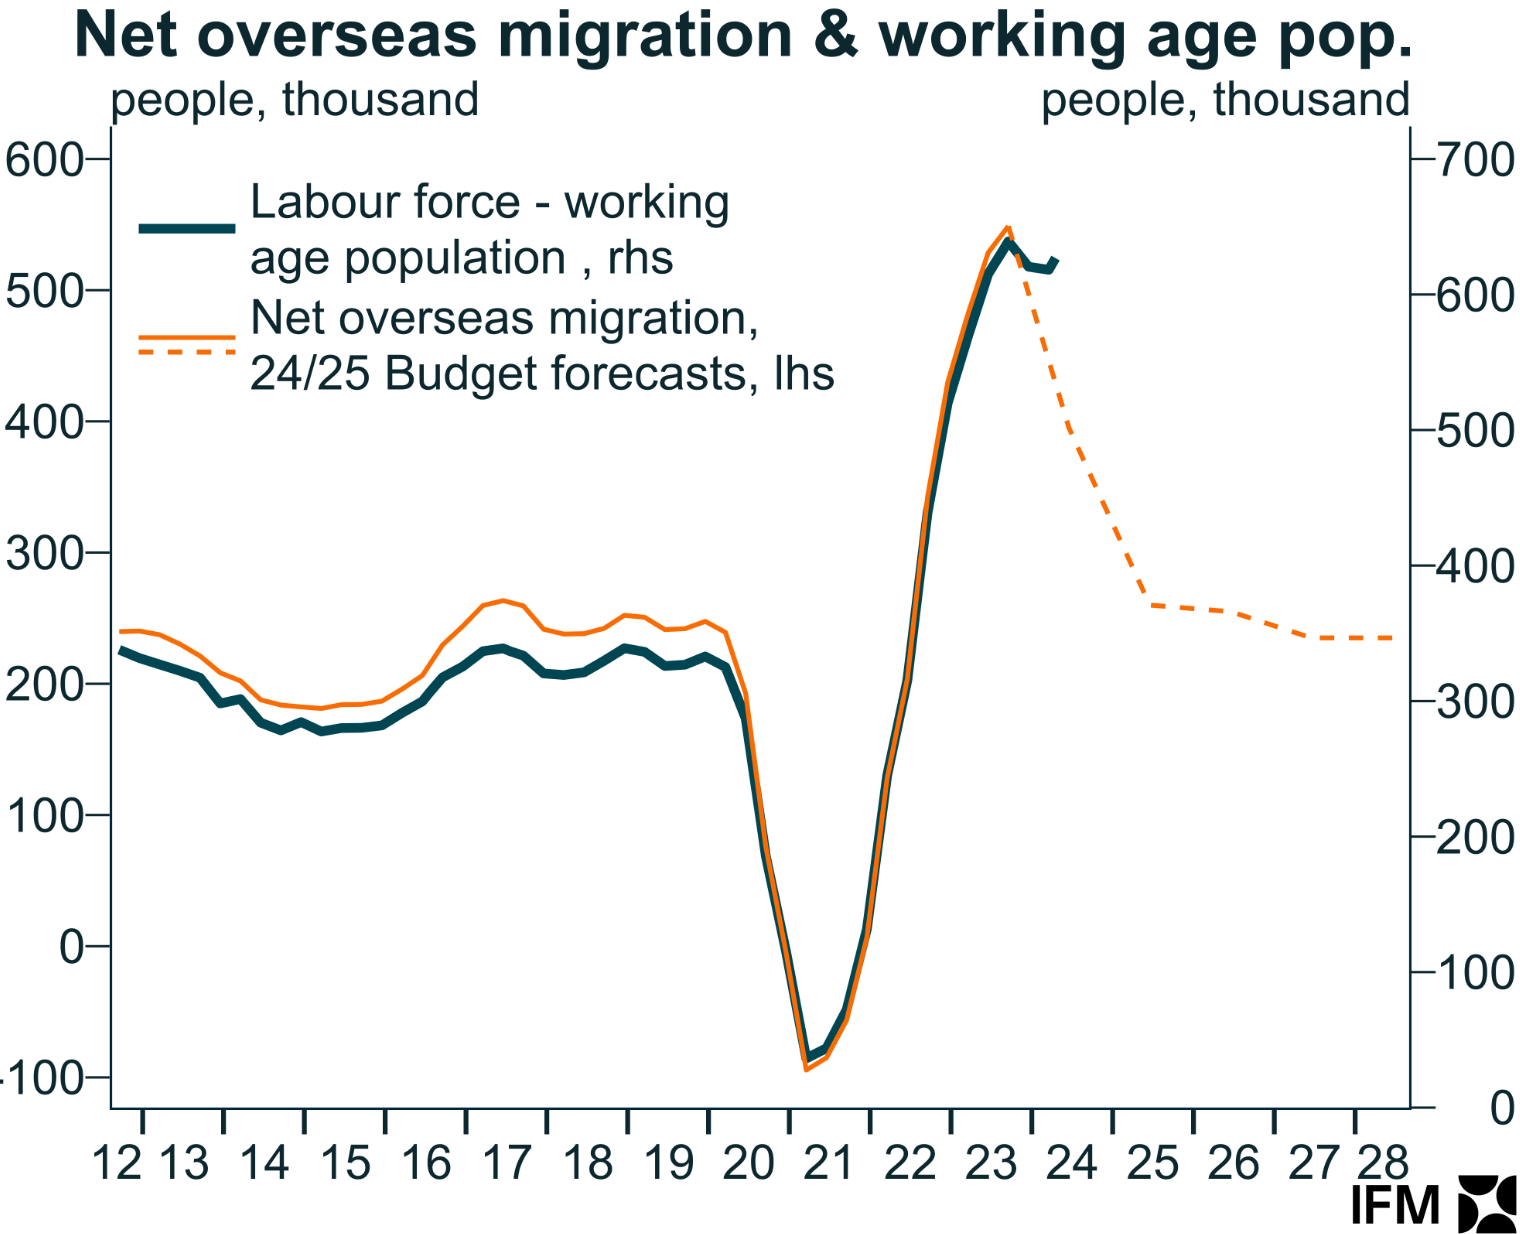 NOM vs working age population